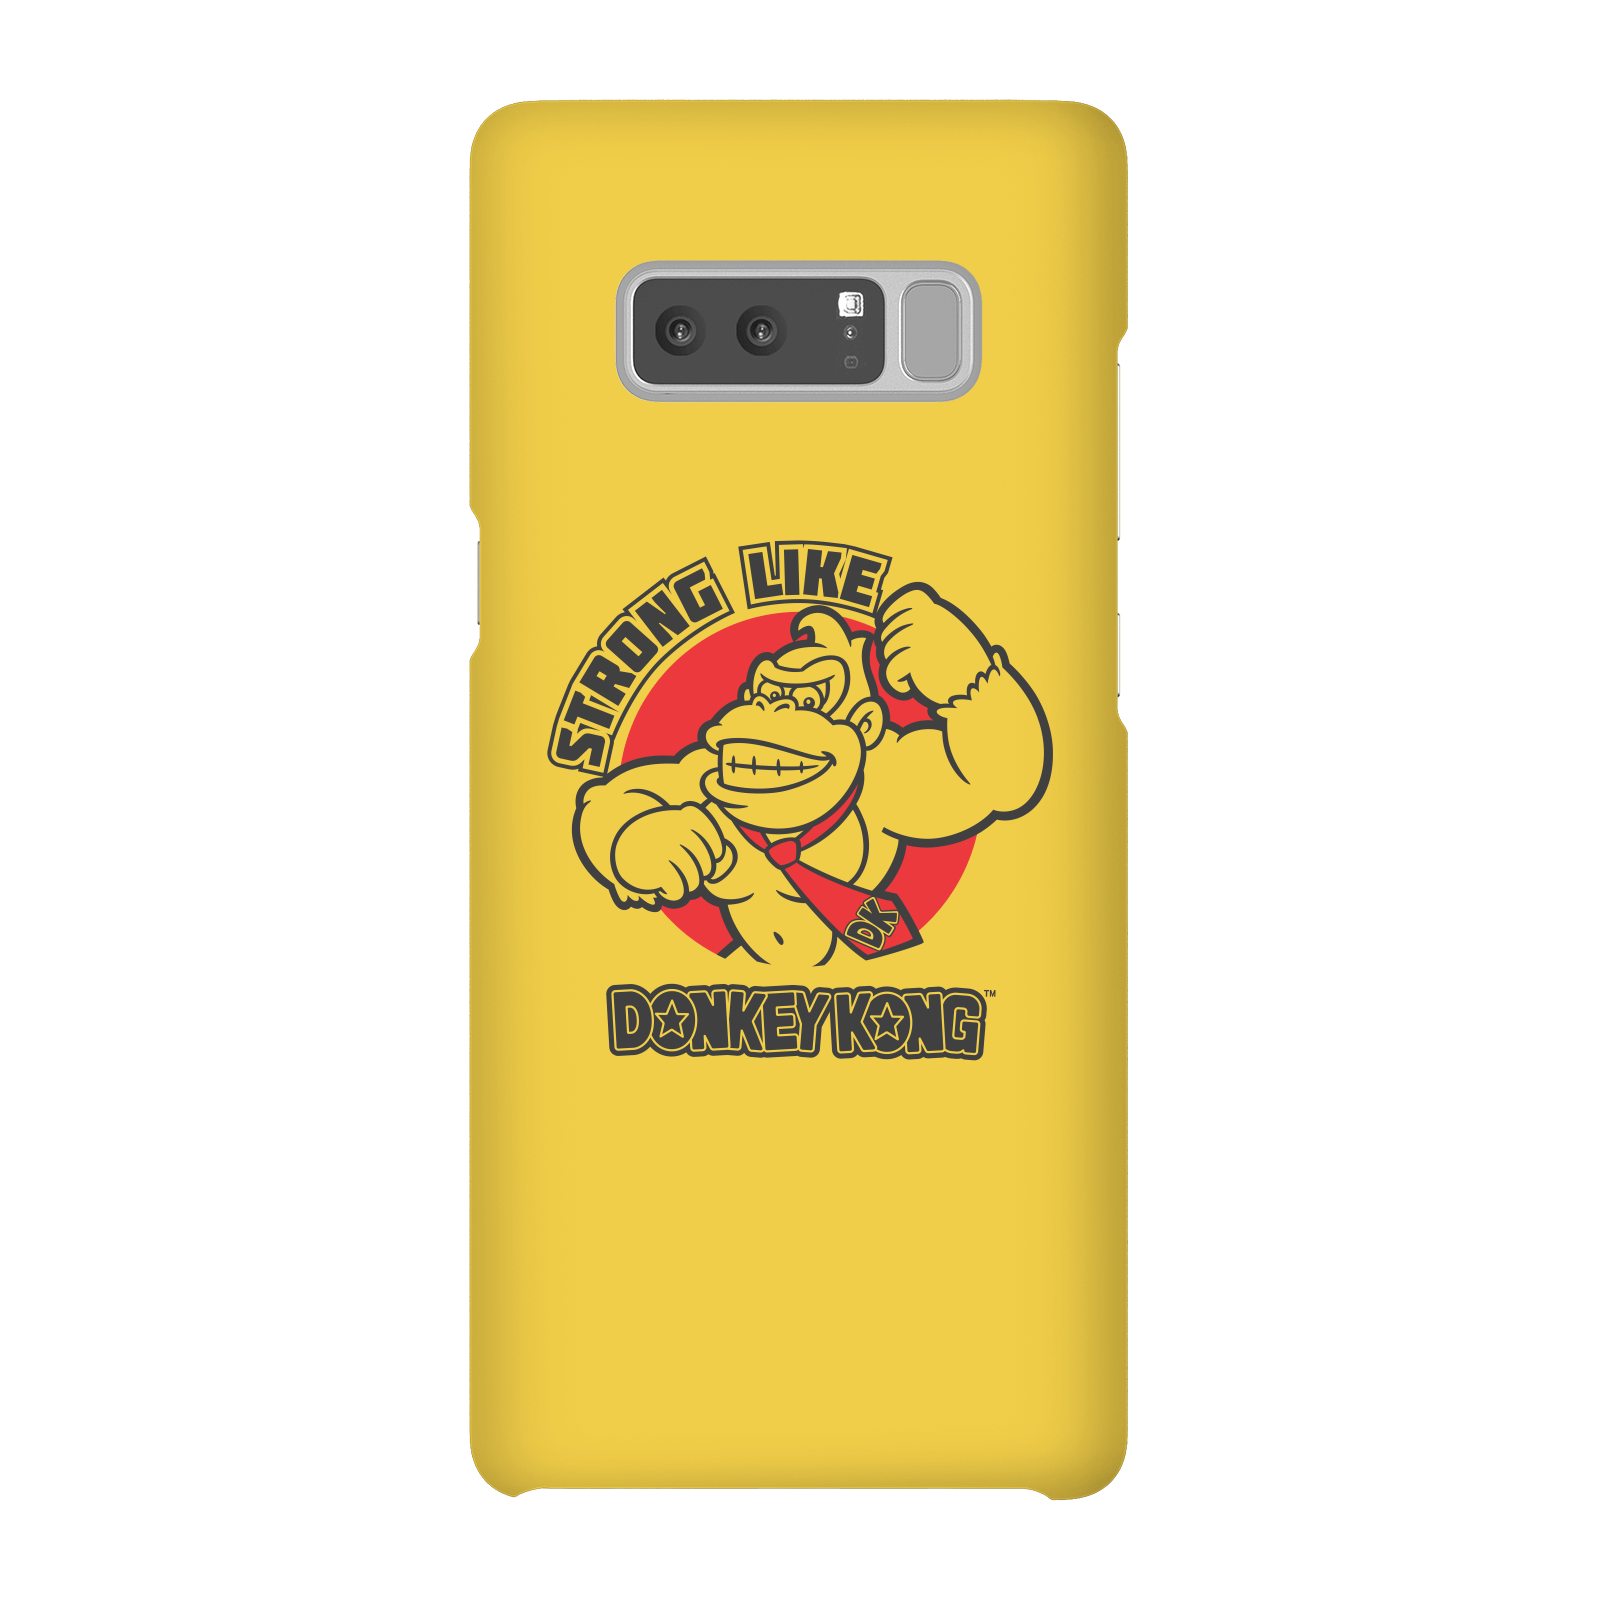 Nintendo Donkey Kong Strong Like Donkey Kong Phone Case - Samsung Note 8 - Snap Case - Matte